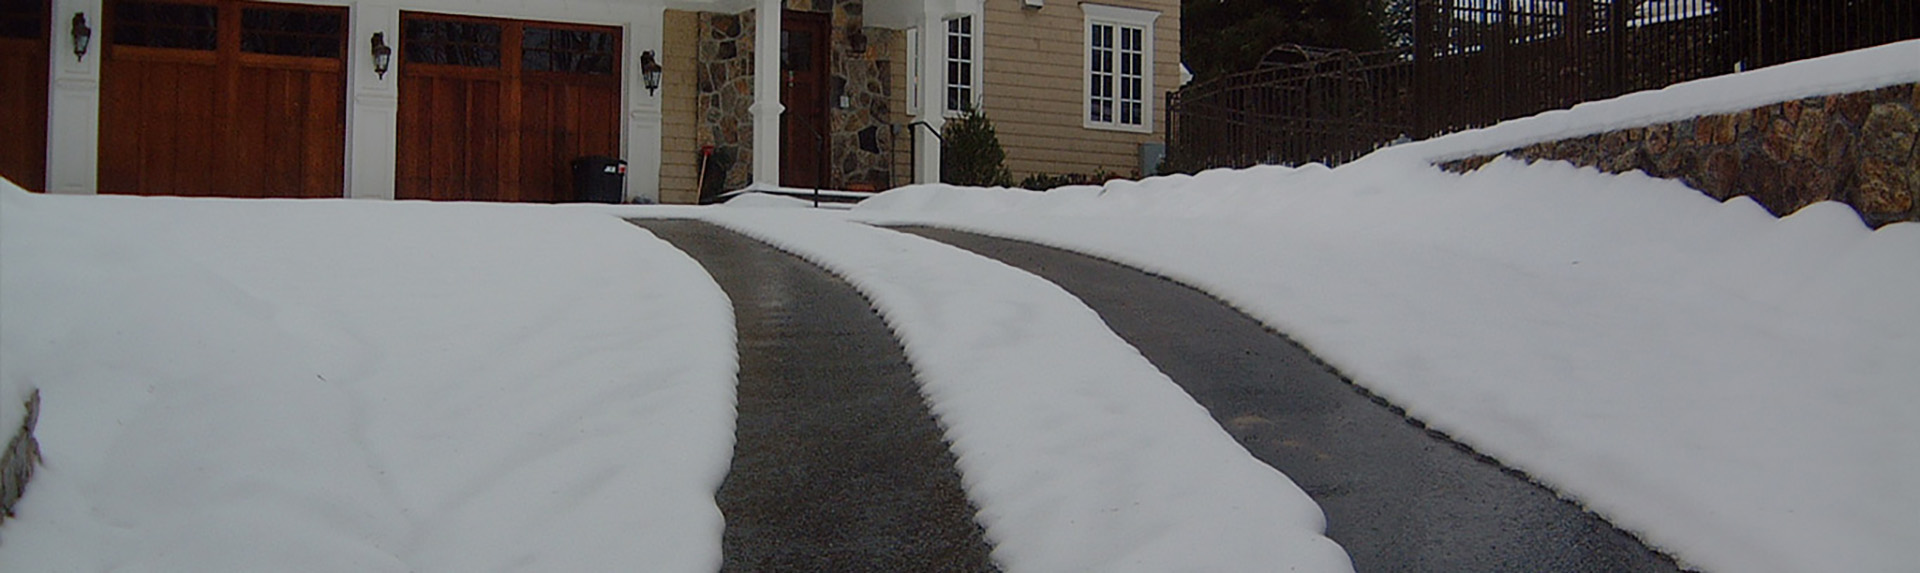 Asphalt heated driveway tire tracks after snowstorm banner